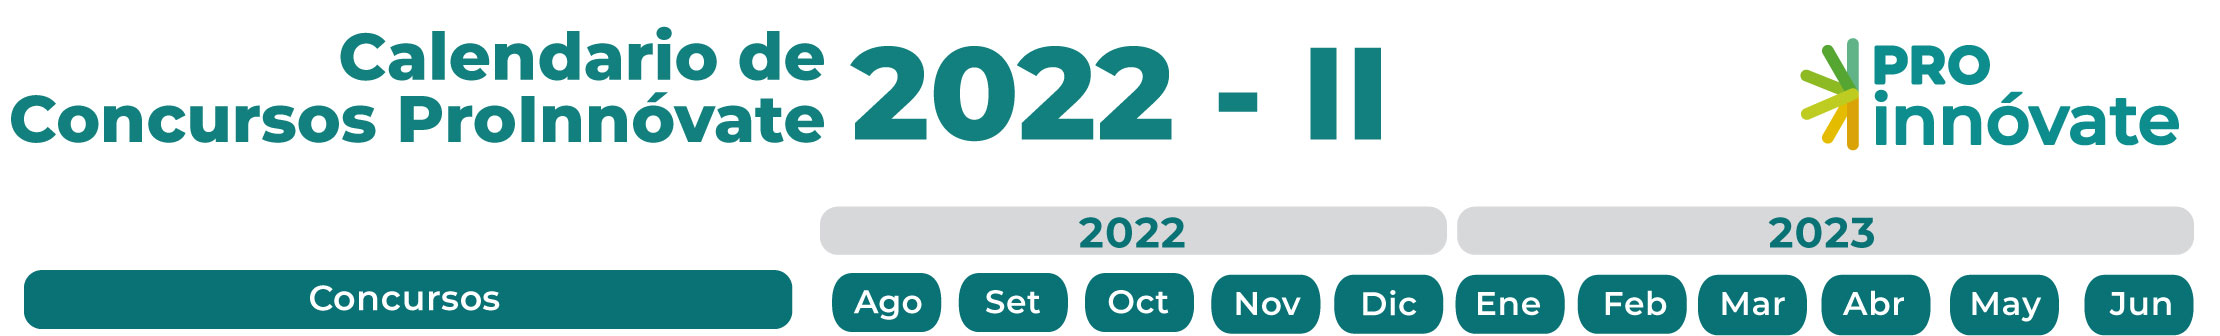 calendario 2022 II